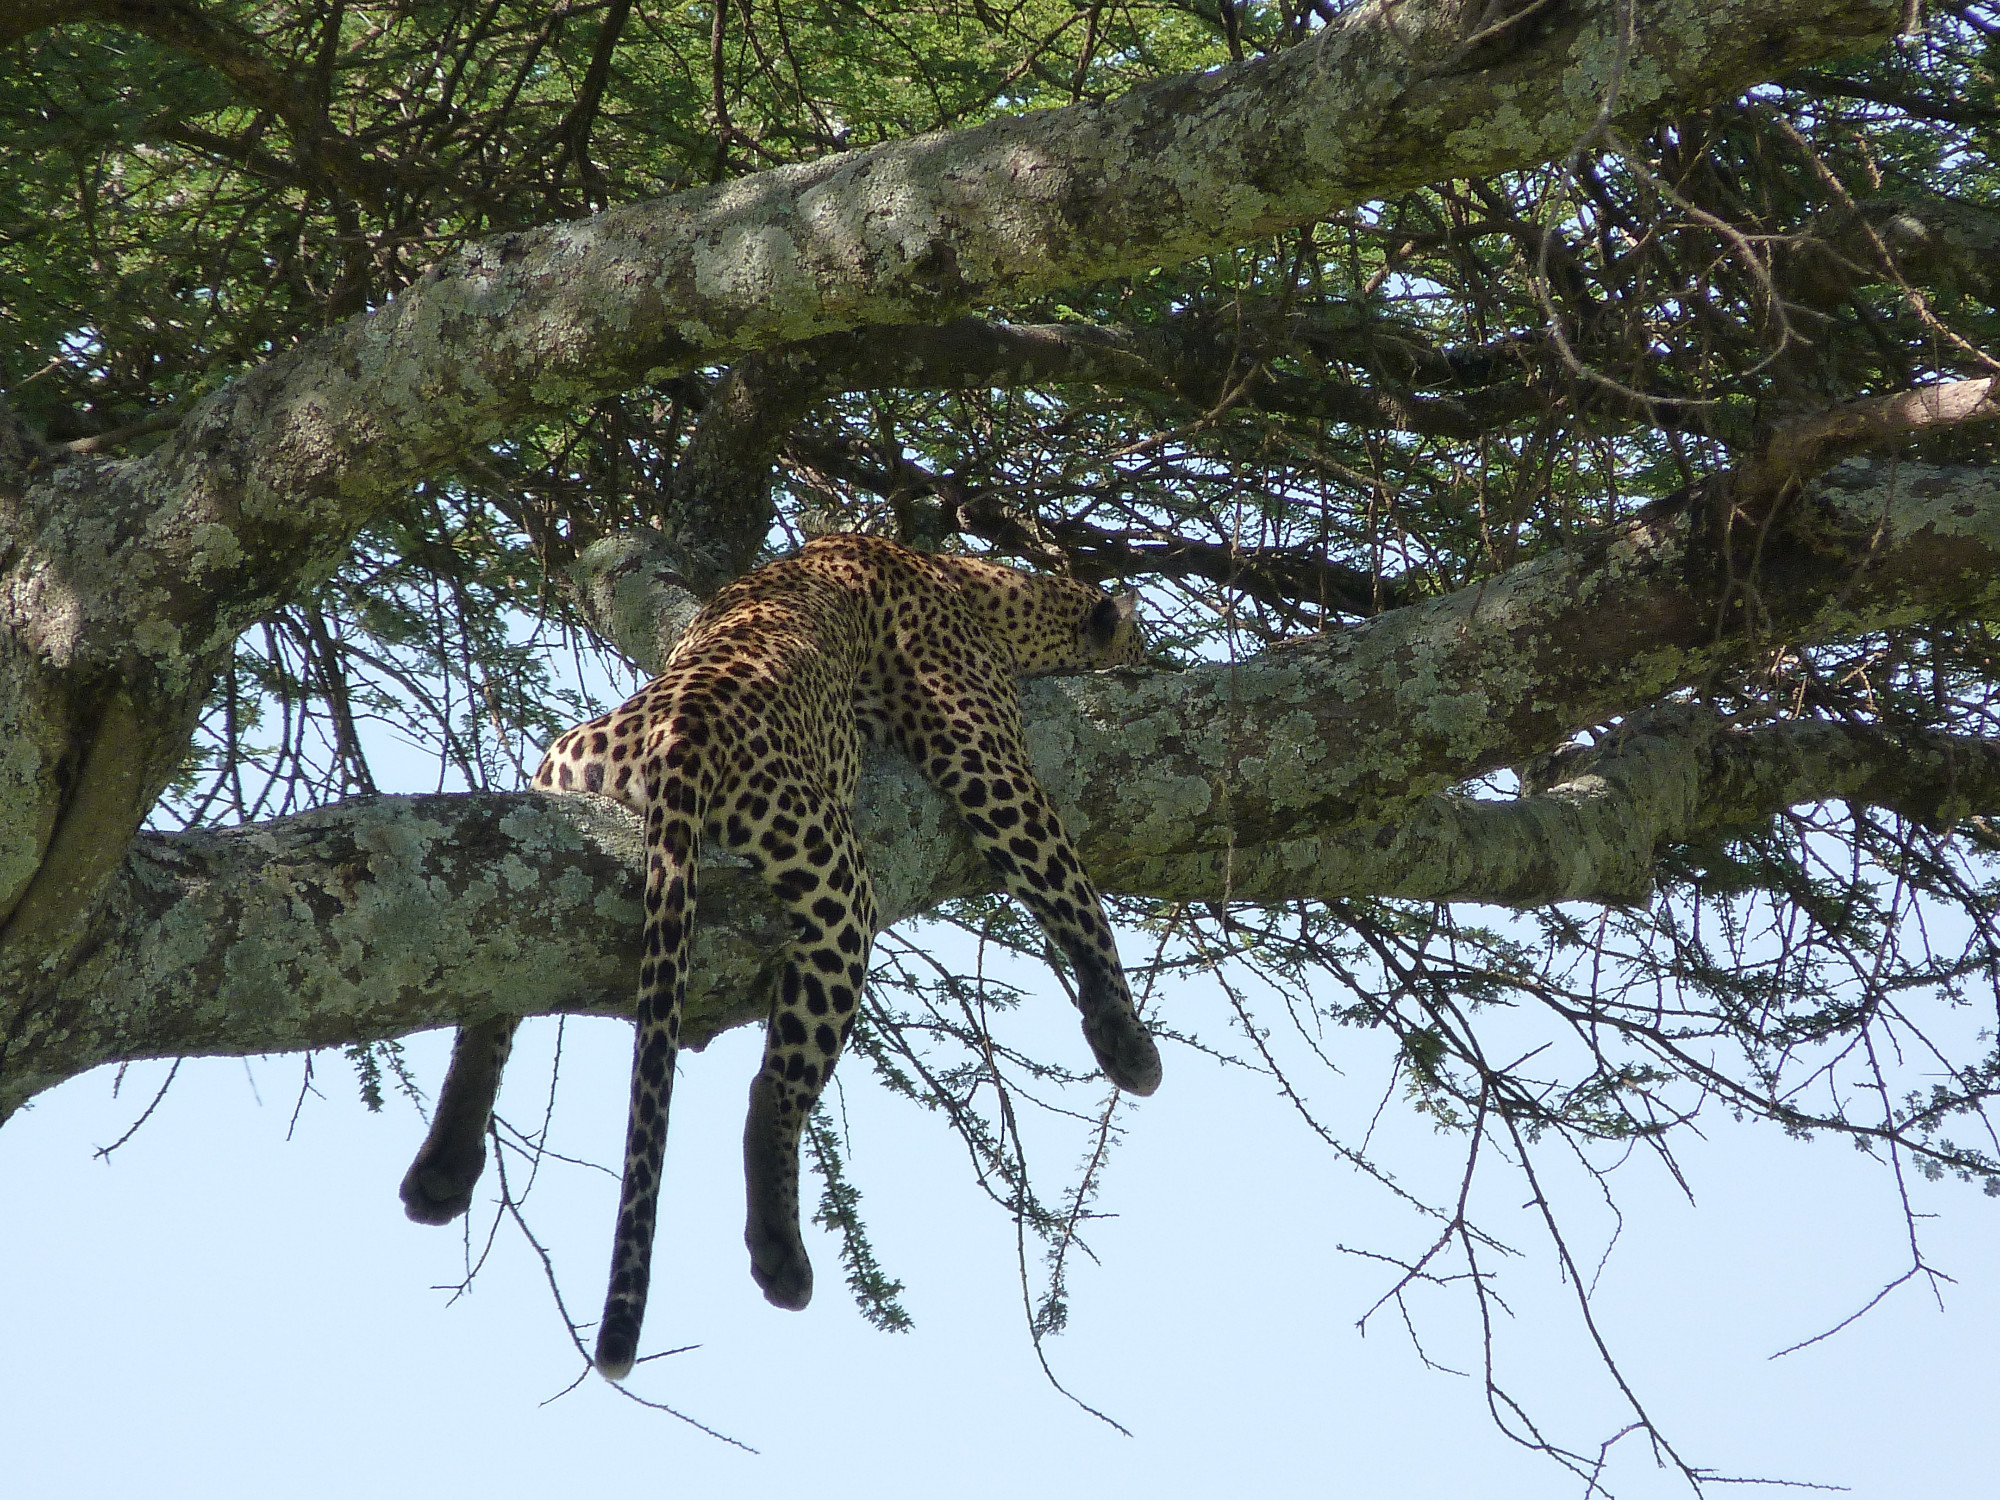 Leopard having a rest